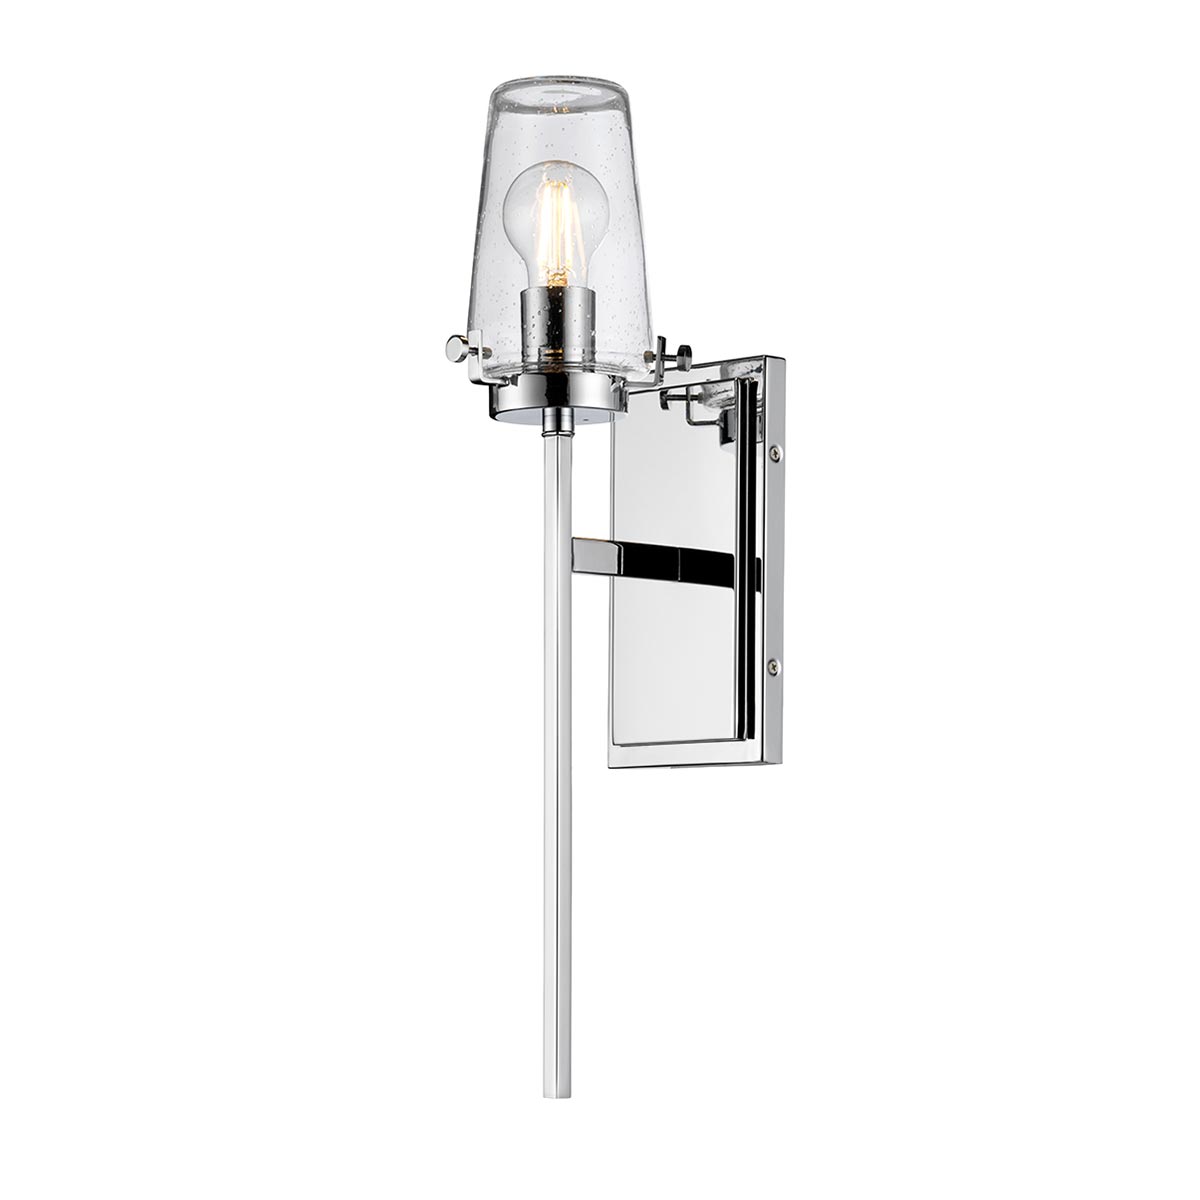 Kichler Alton Chrome 1 Lamp Bathroom Wall Light Seeded Glass IP44